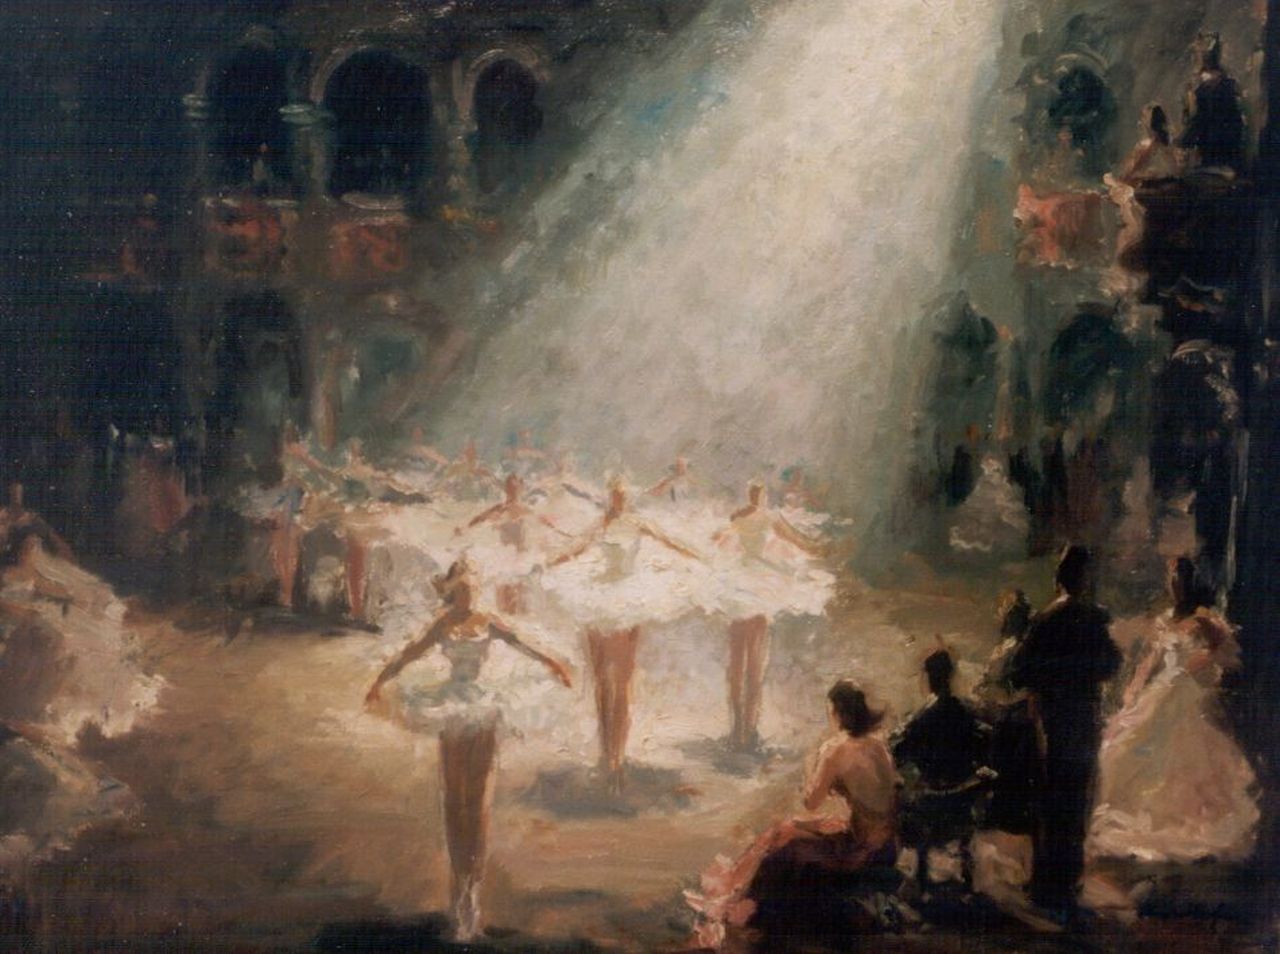 Mayrhofer M.  | Max Mayrhofer, De balletvoorstelling, olieverf op doek 60,2 x 80,2 cm, gesigneerd rechtsonder